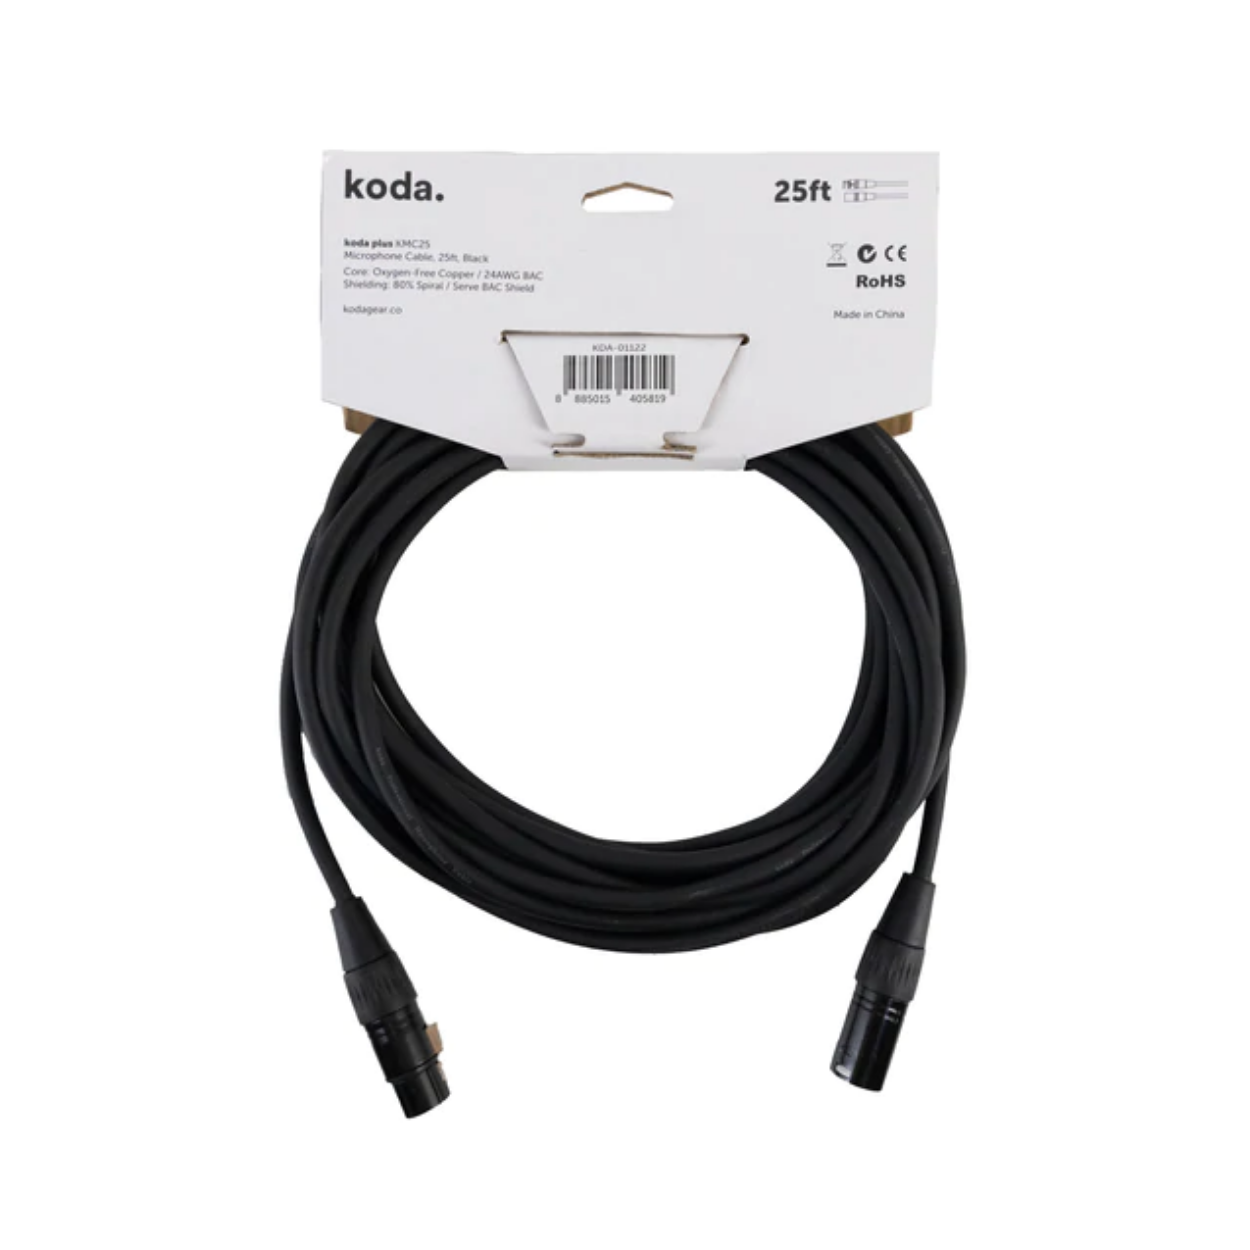 koda plus KMC25 Microphone Cable, 25ft, Black